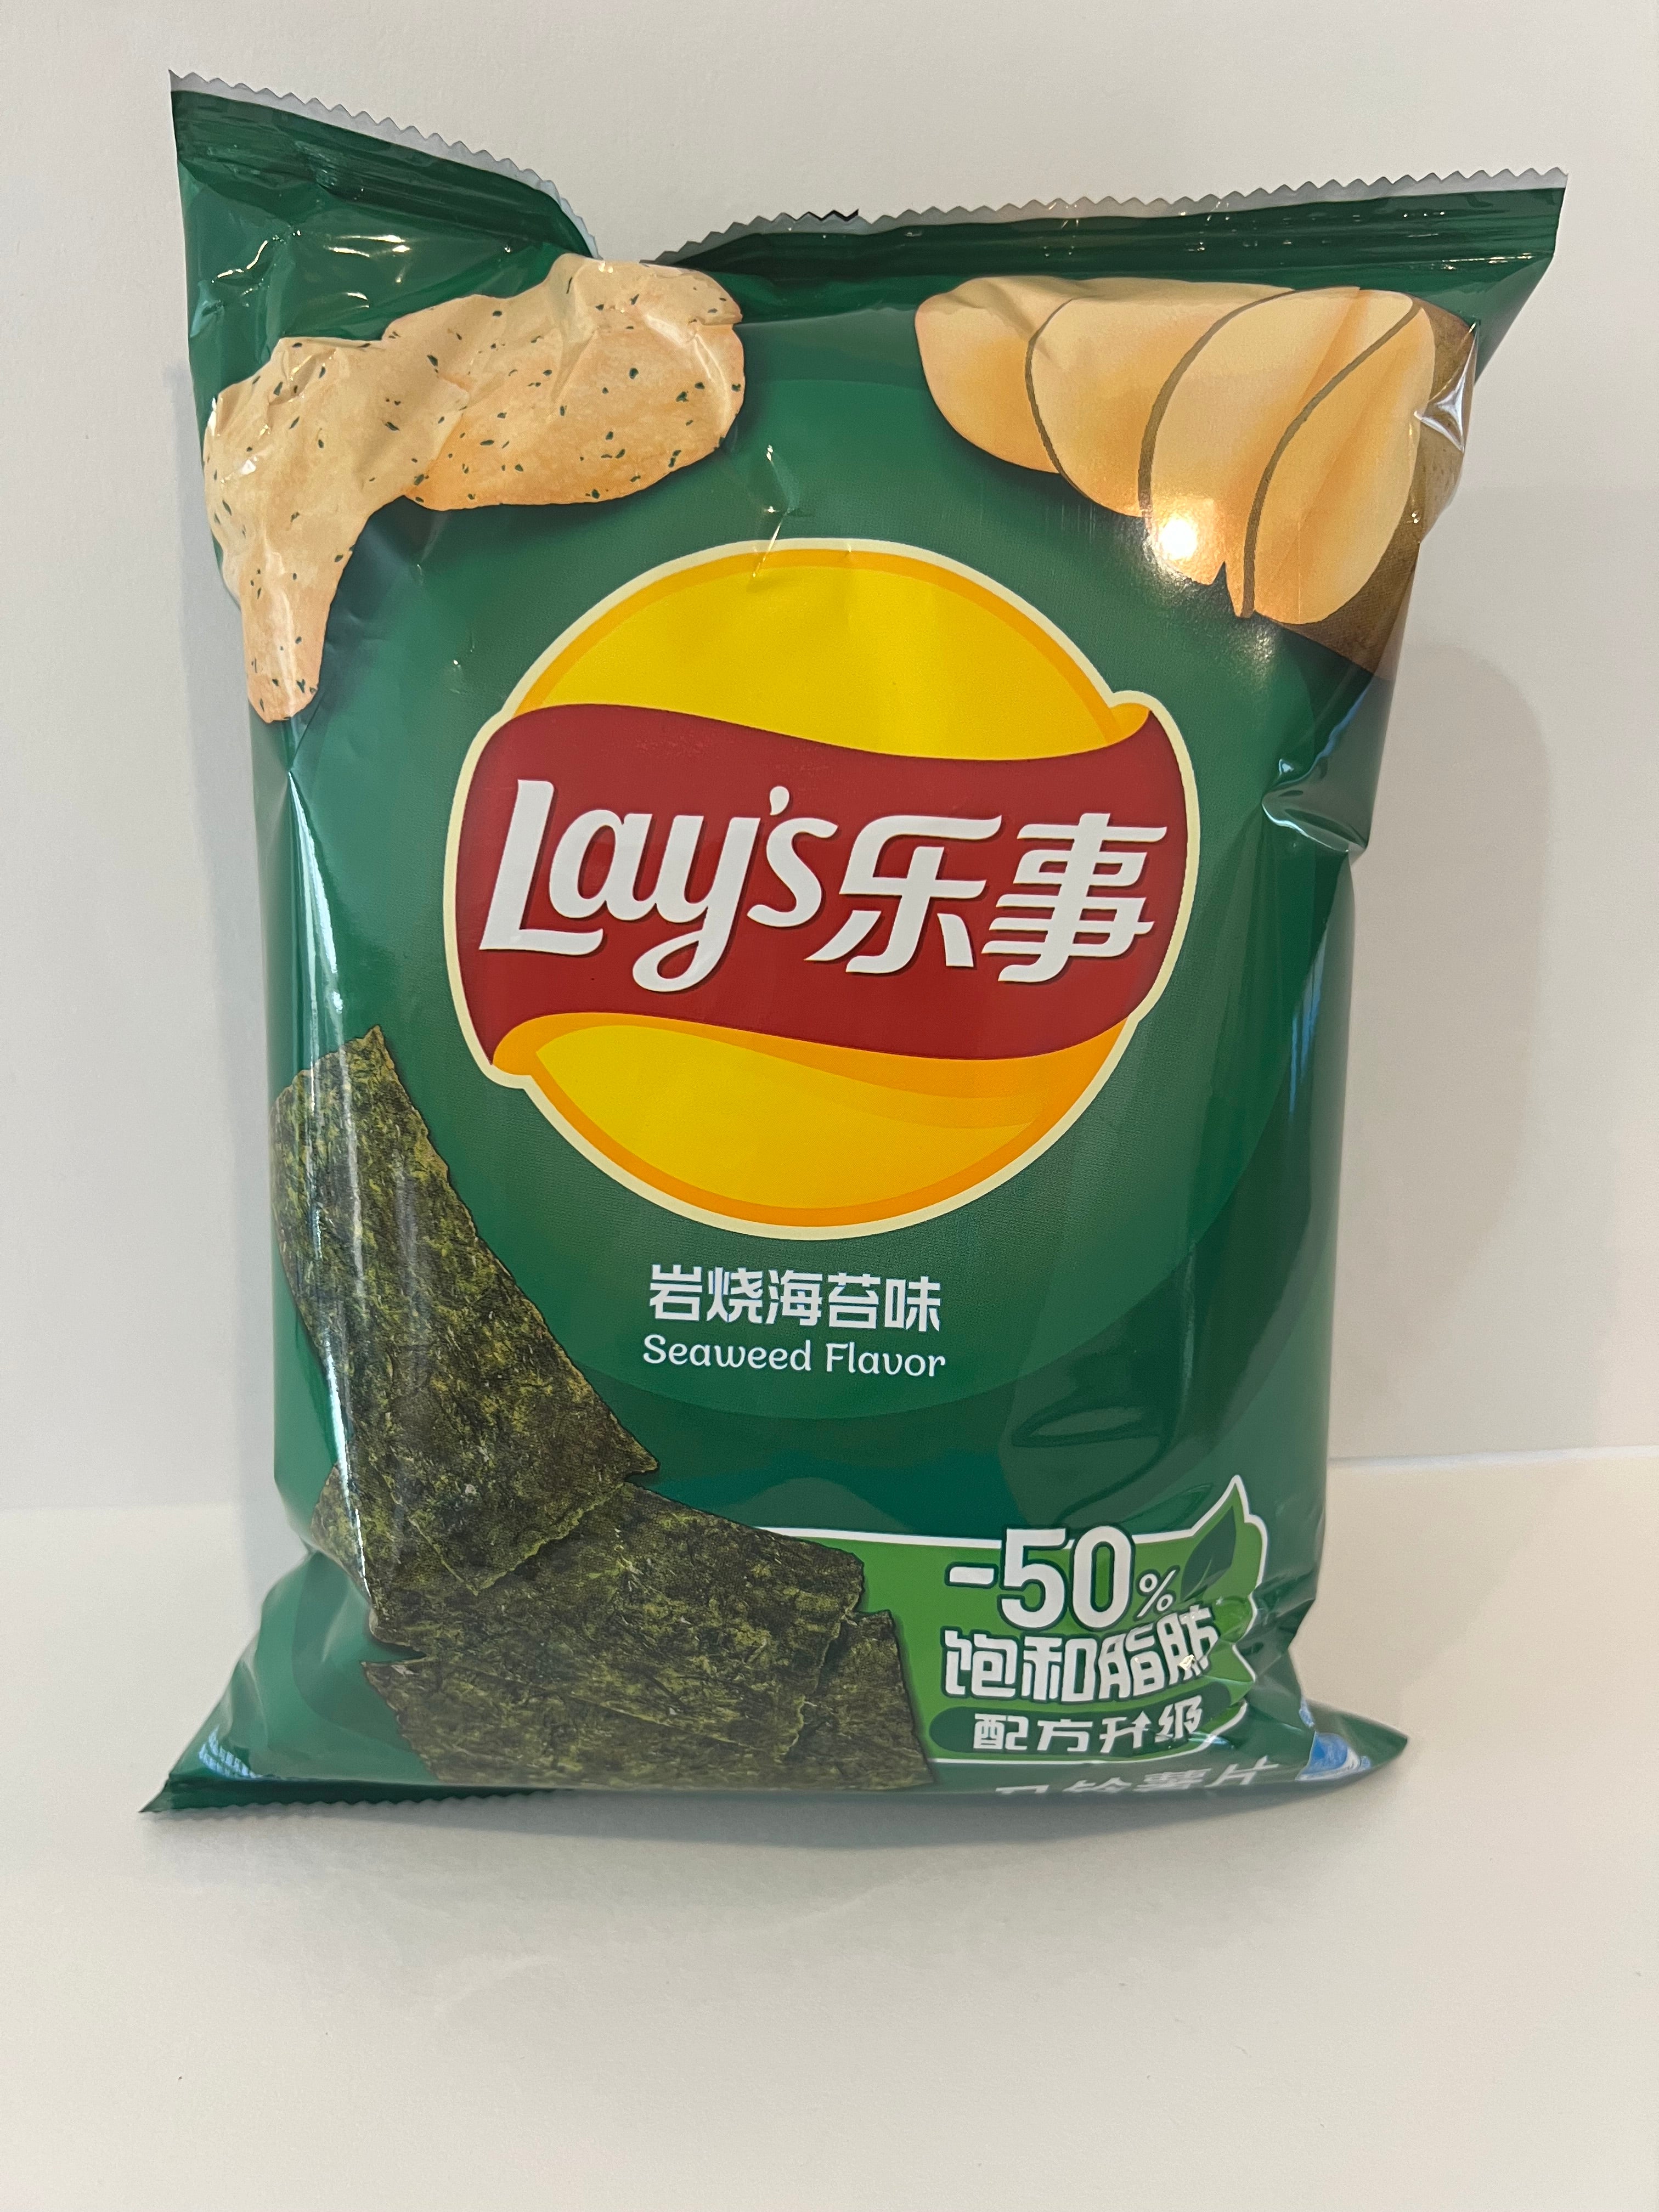 Lay's Seaweed flavor